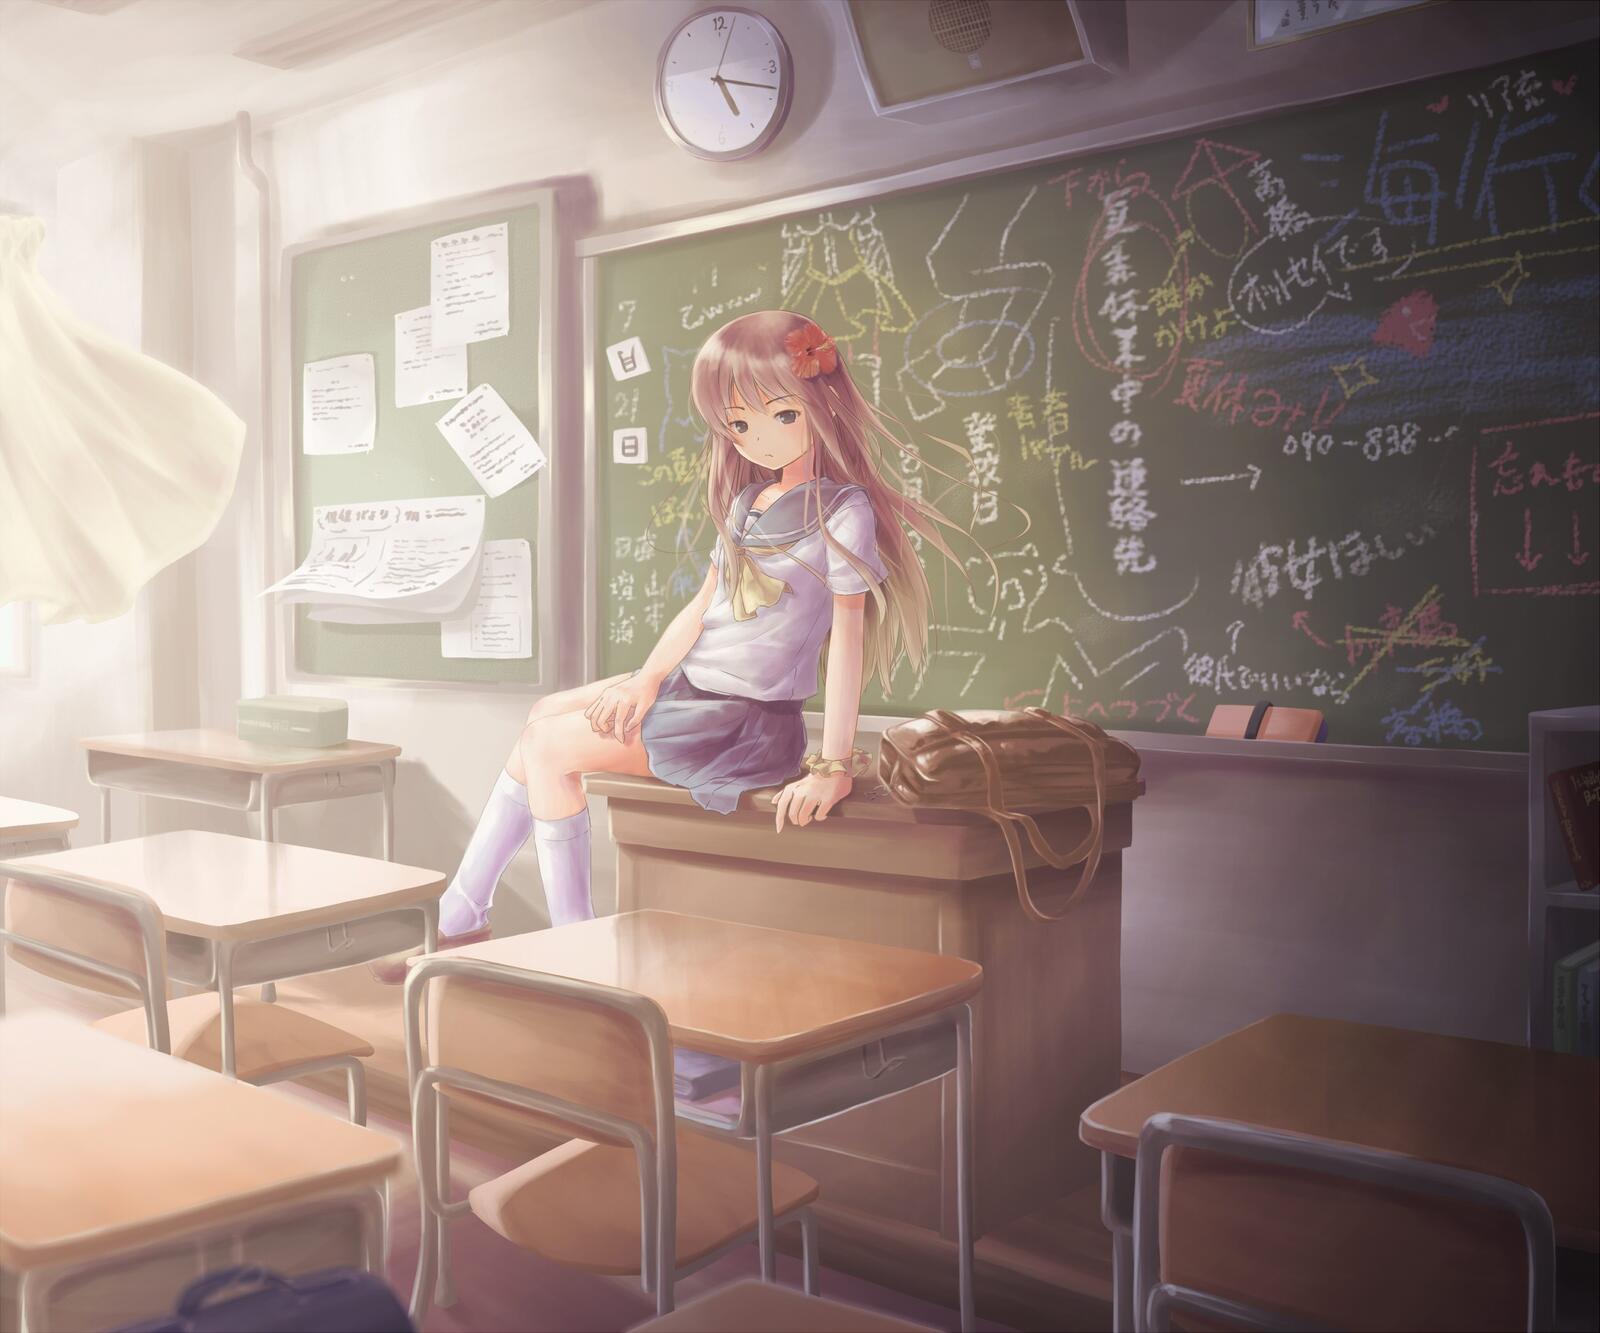 Wallpapers an anime school girl on the desktop